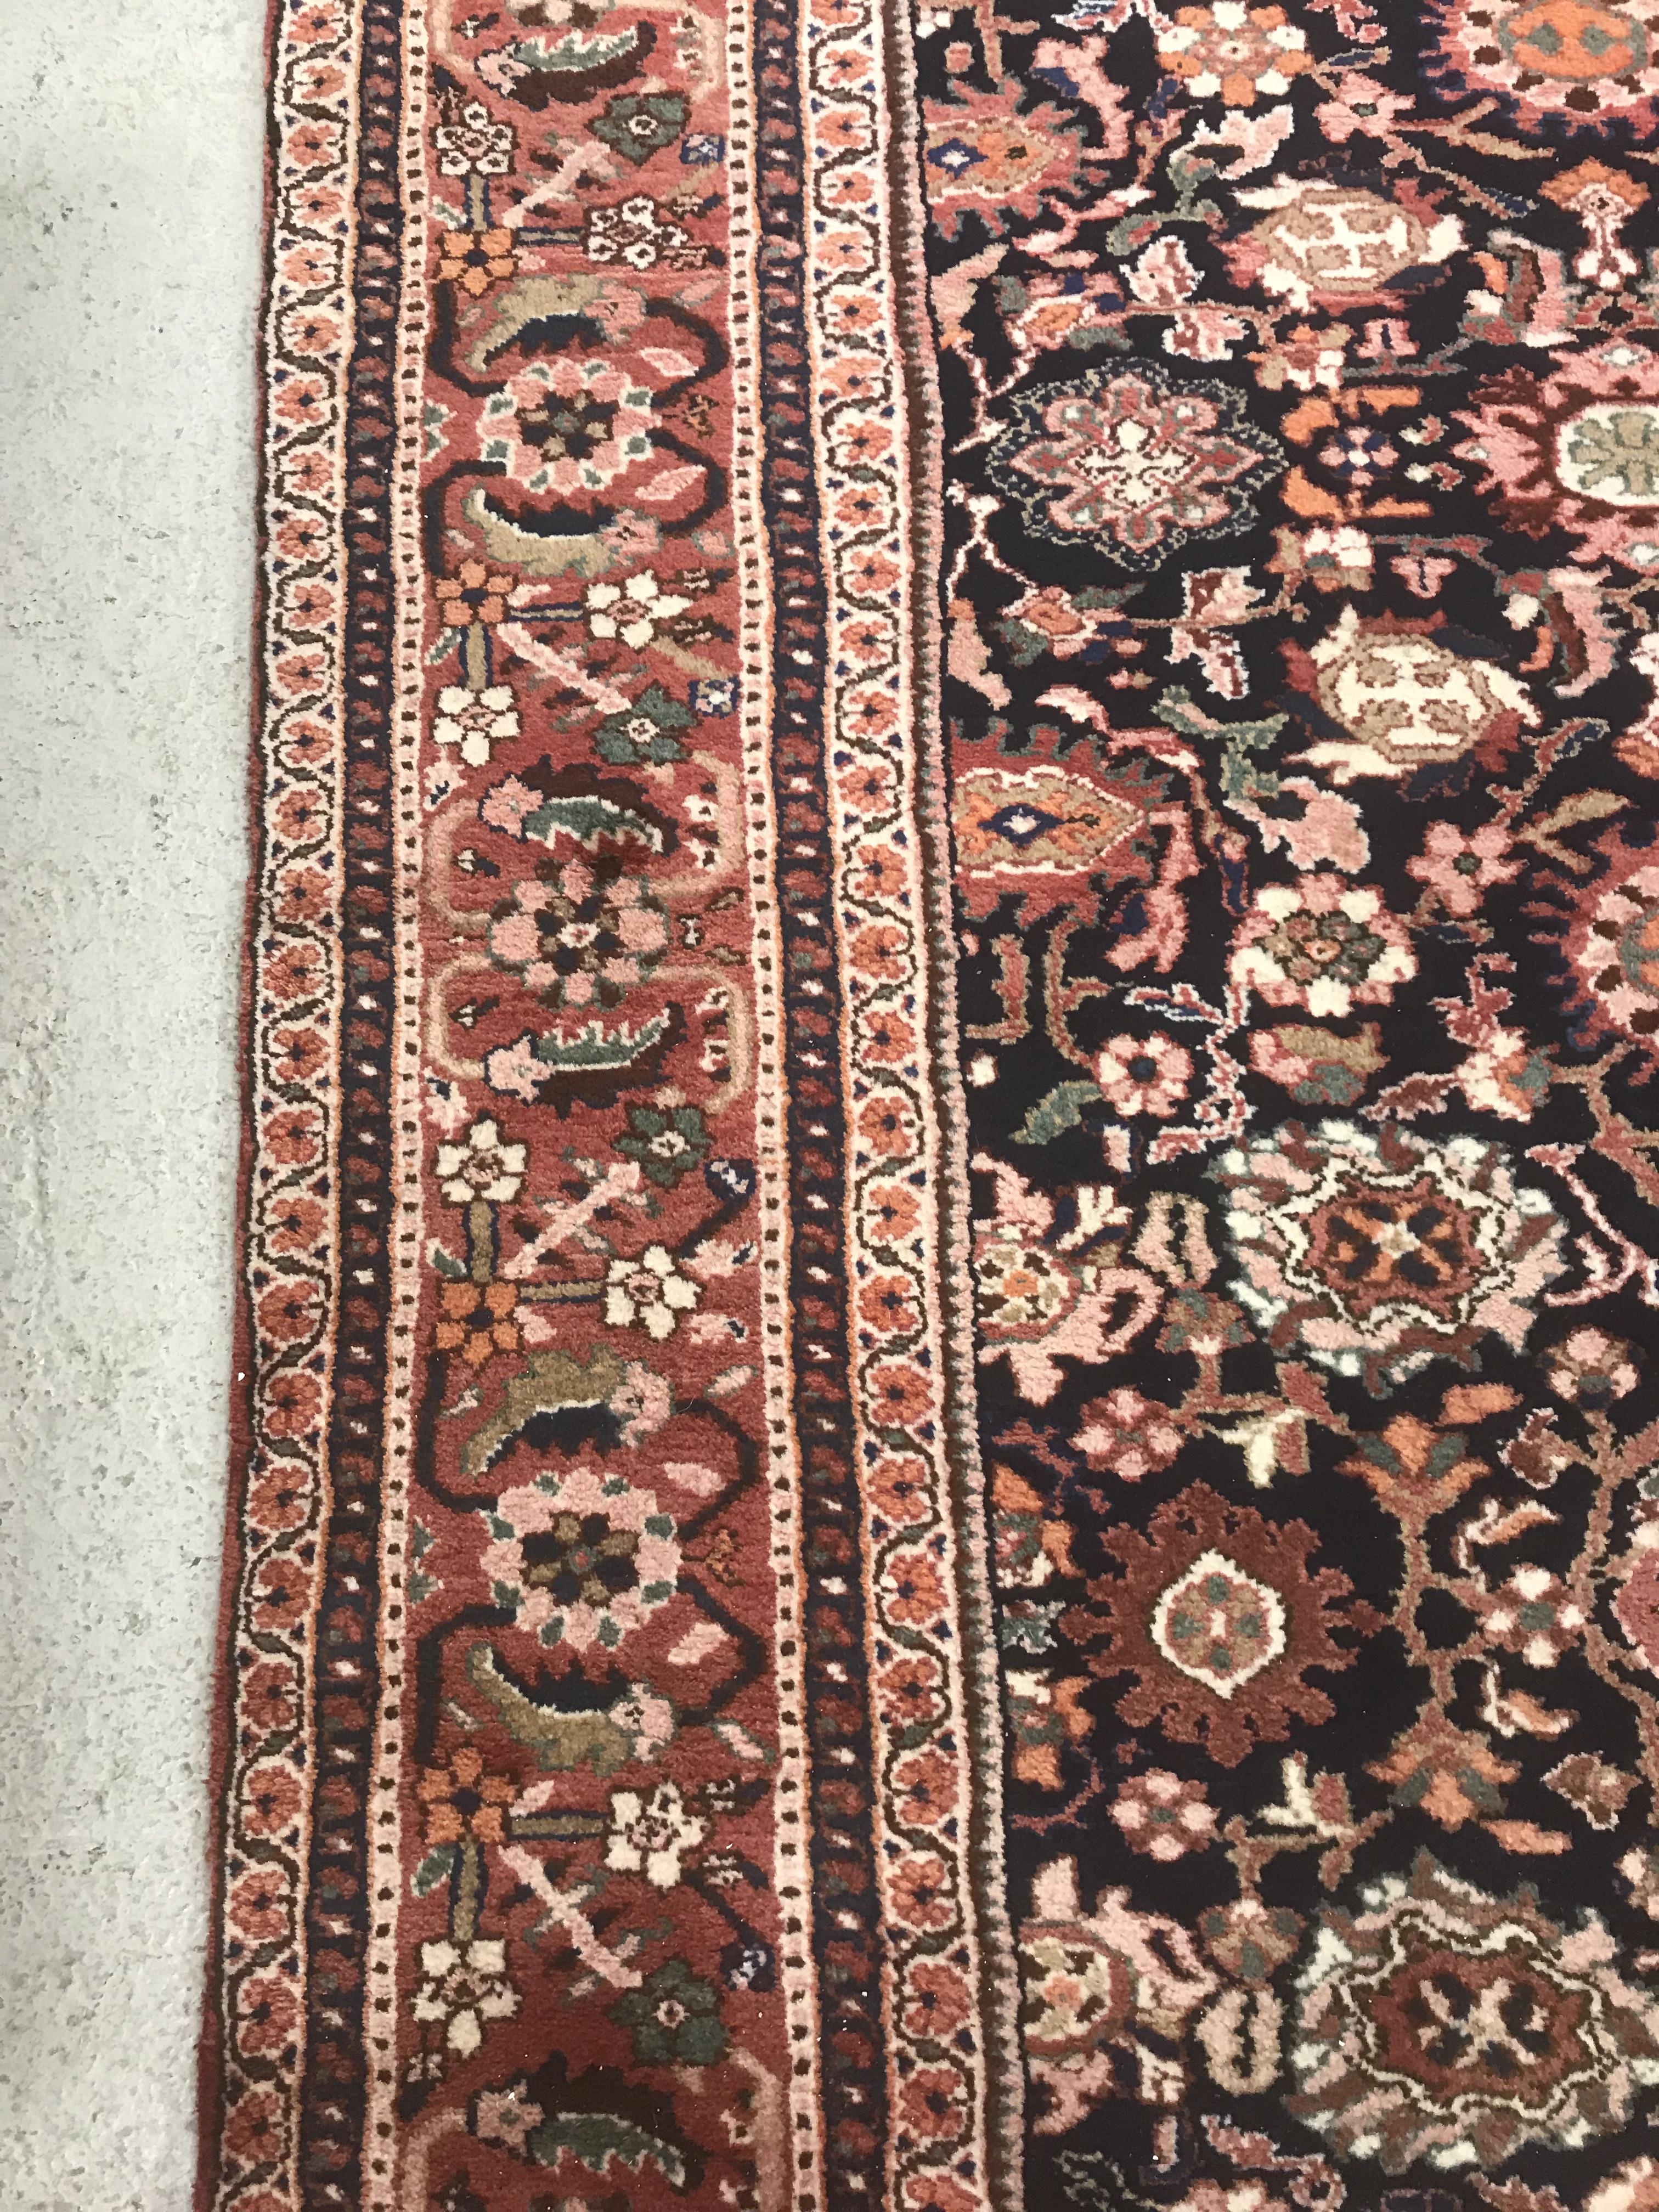 A 20th Century Afghan Kazak carpet, - Image 10 of 36